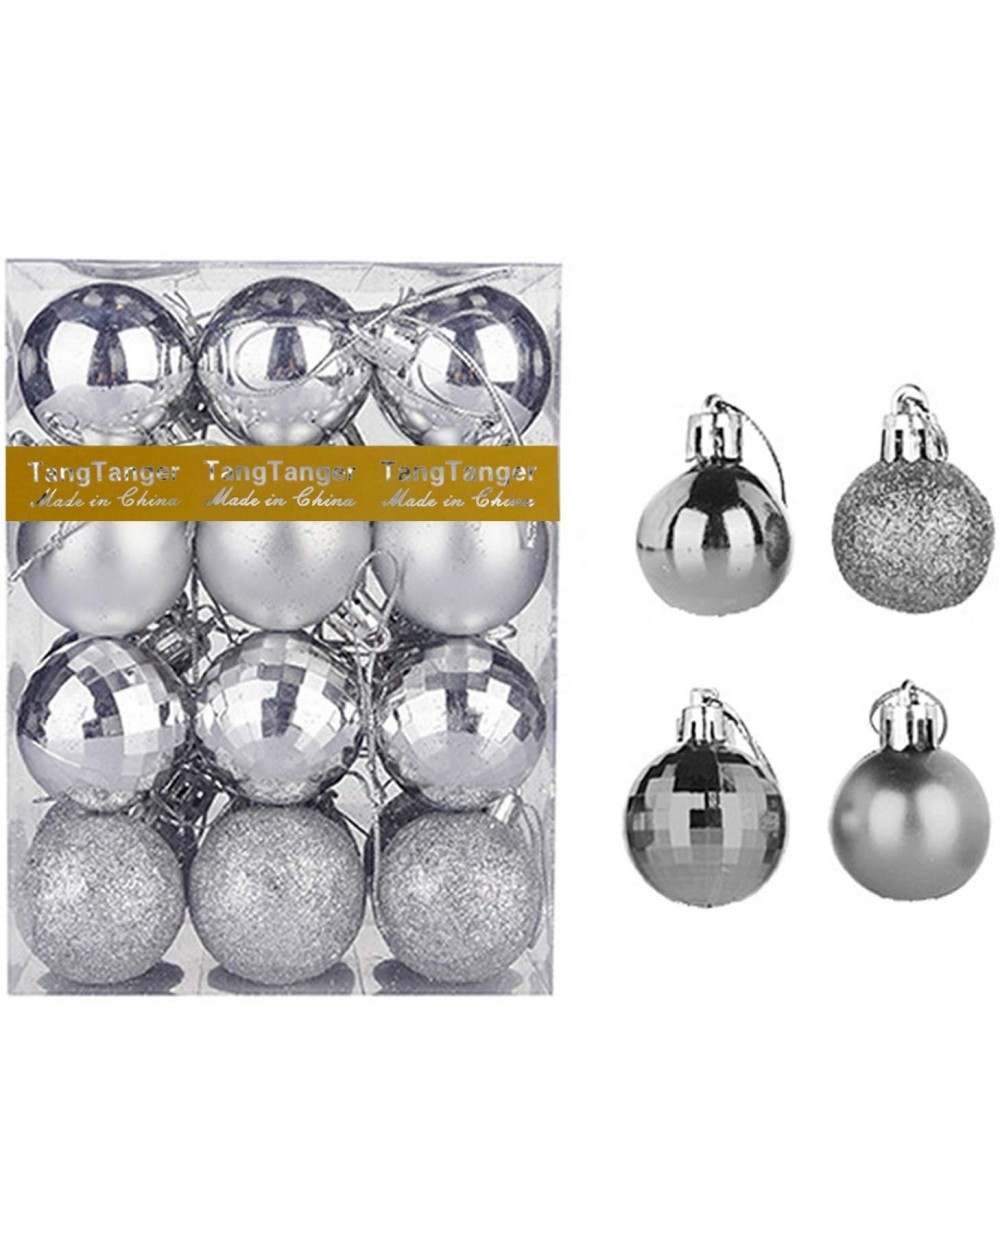 Ornaments Christmas Ball Assorted Pendant Shatterproof Ball Ornament Set Seasonal Holiday Wedding Party Decorations(24 pcs- 4...